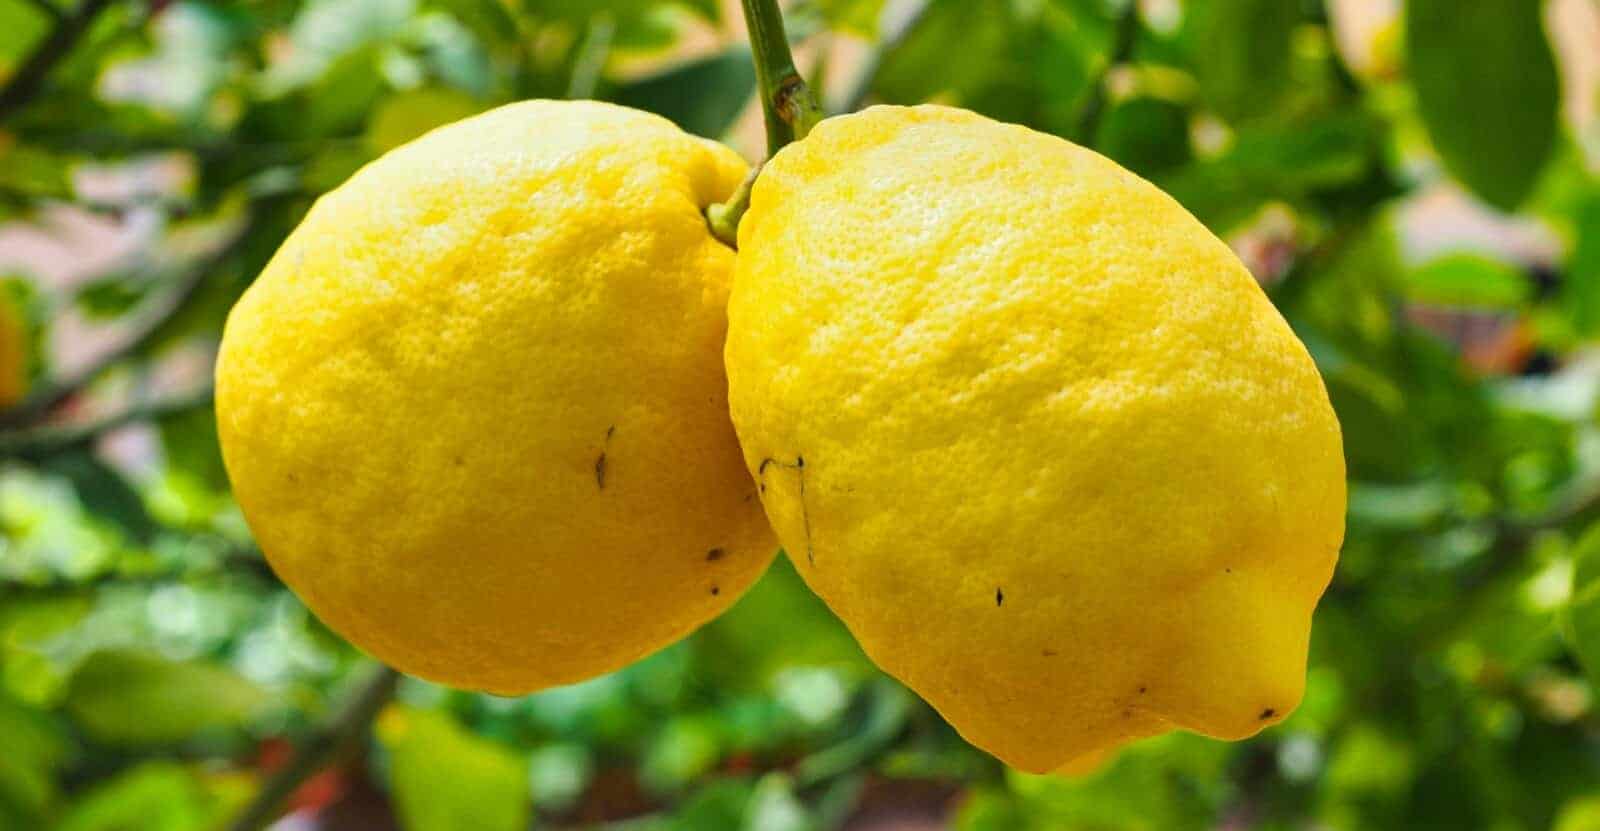 grwo lemon tree from seed